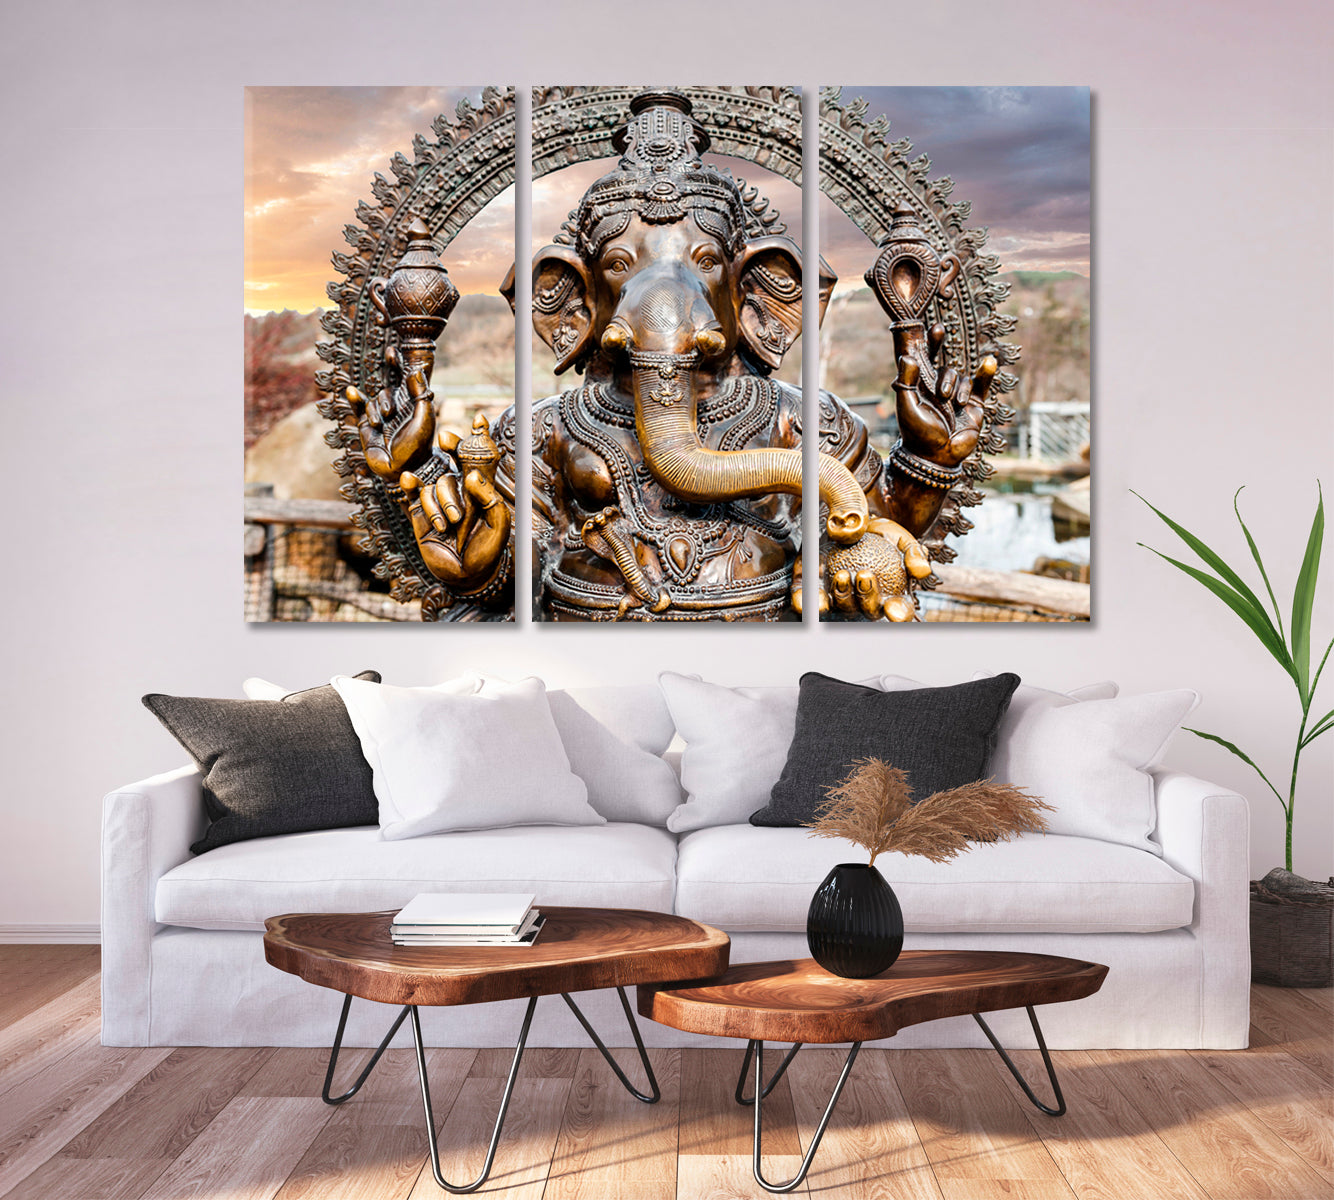 Statue of Hindu Elephant God Ganesha Dramatic Sky Religious Modern Art Artesty 3 panels 36" x 24" 